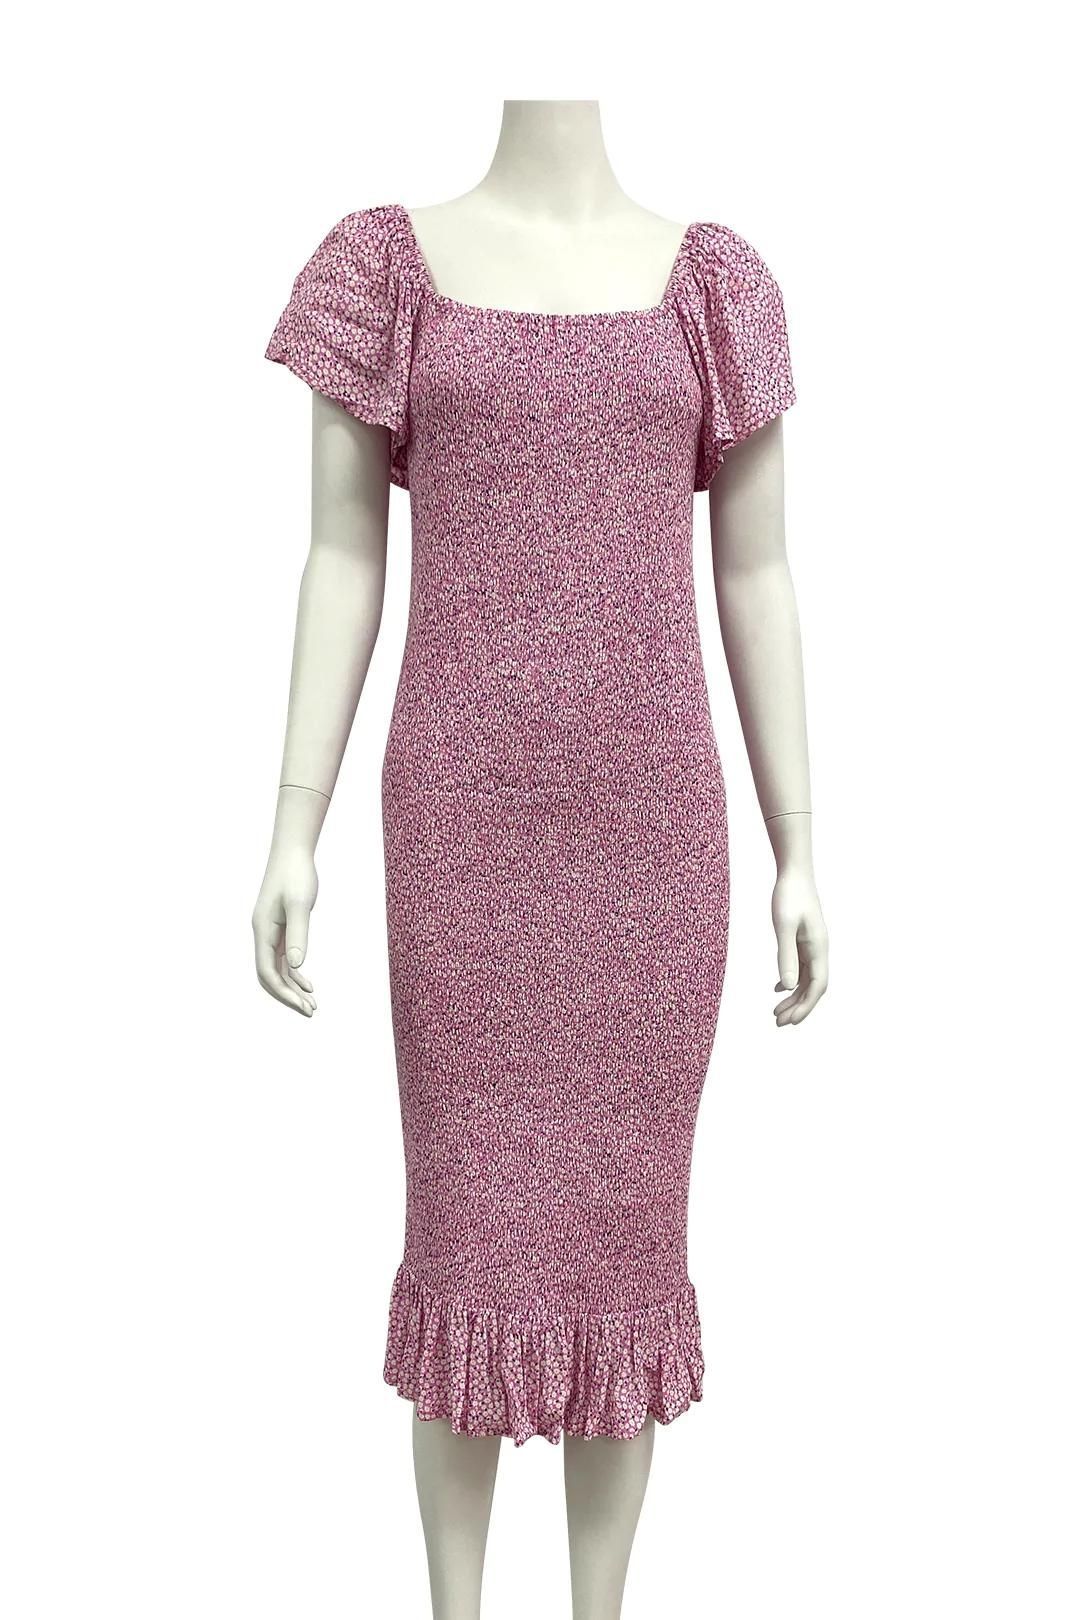 Ripe Maternity - Selma Shirred Dress